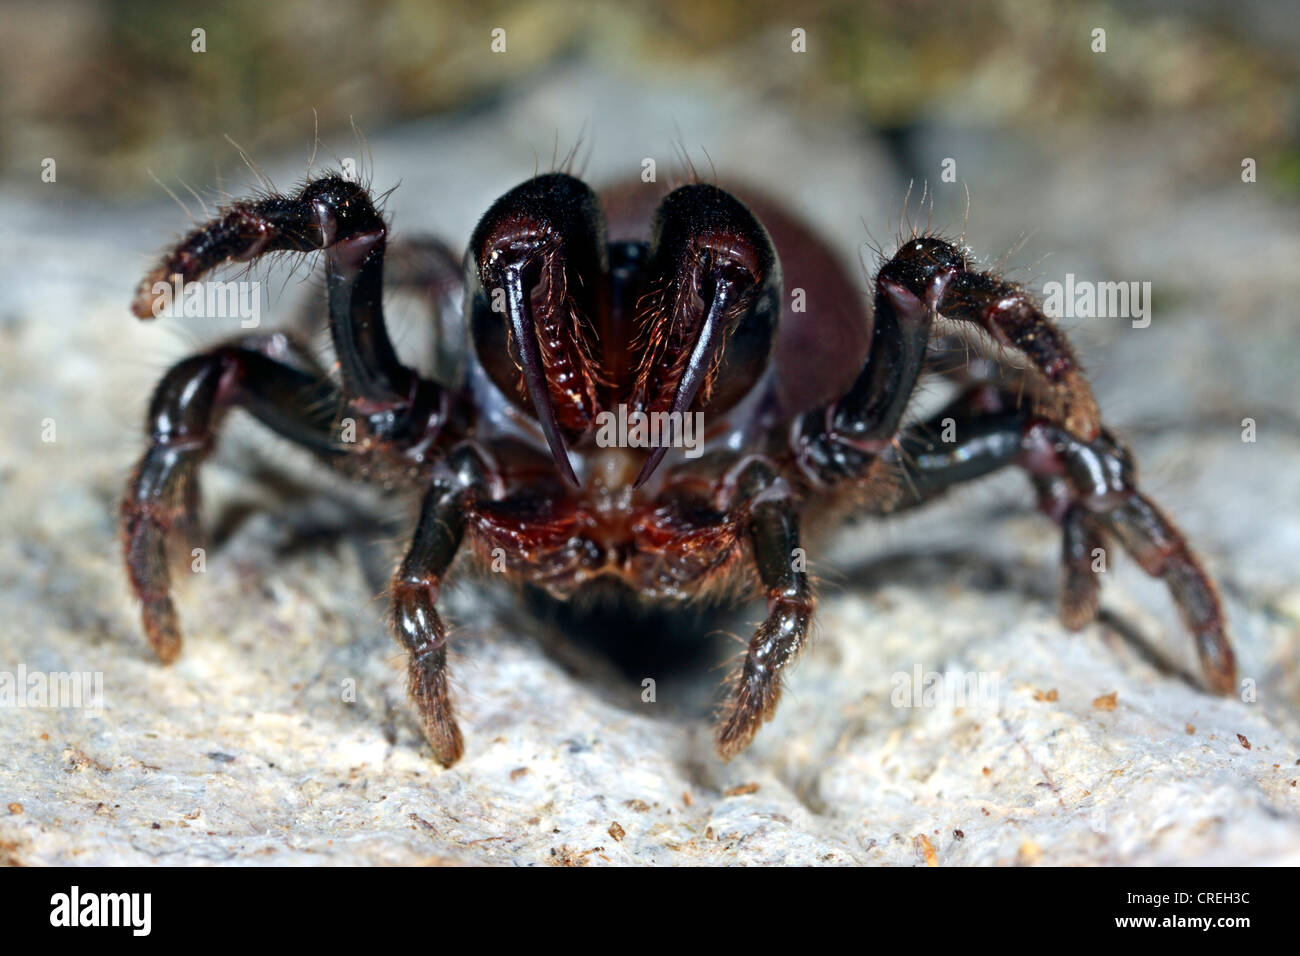 purse-web spider (Atypus affinis), female threatening Stock Photo